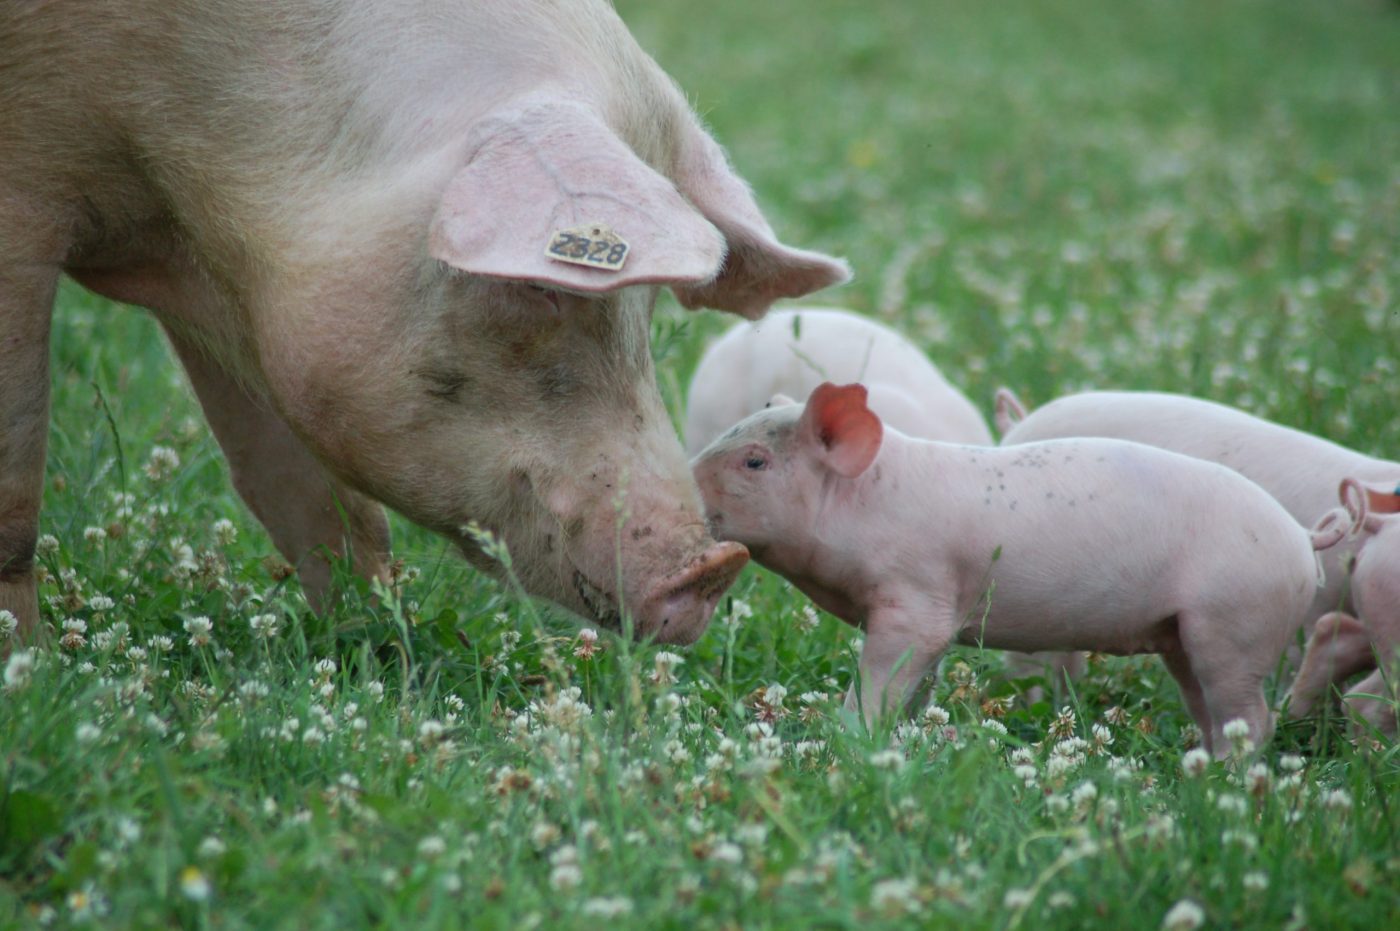 Vertical explainer photo 4 - Nikki and piglets at Farm Sanctuary